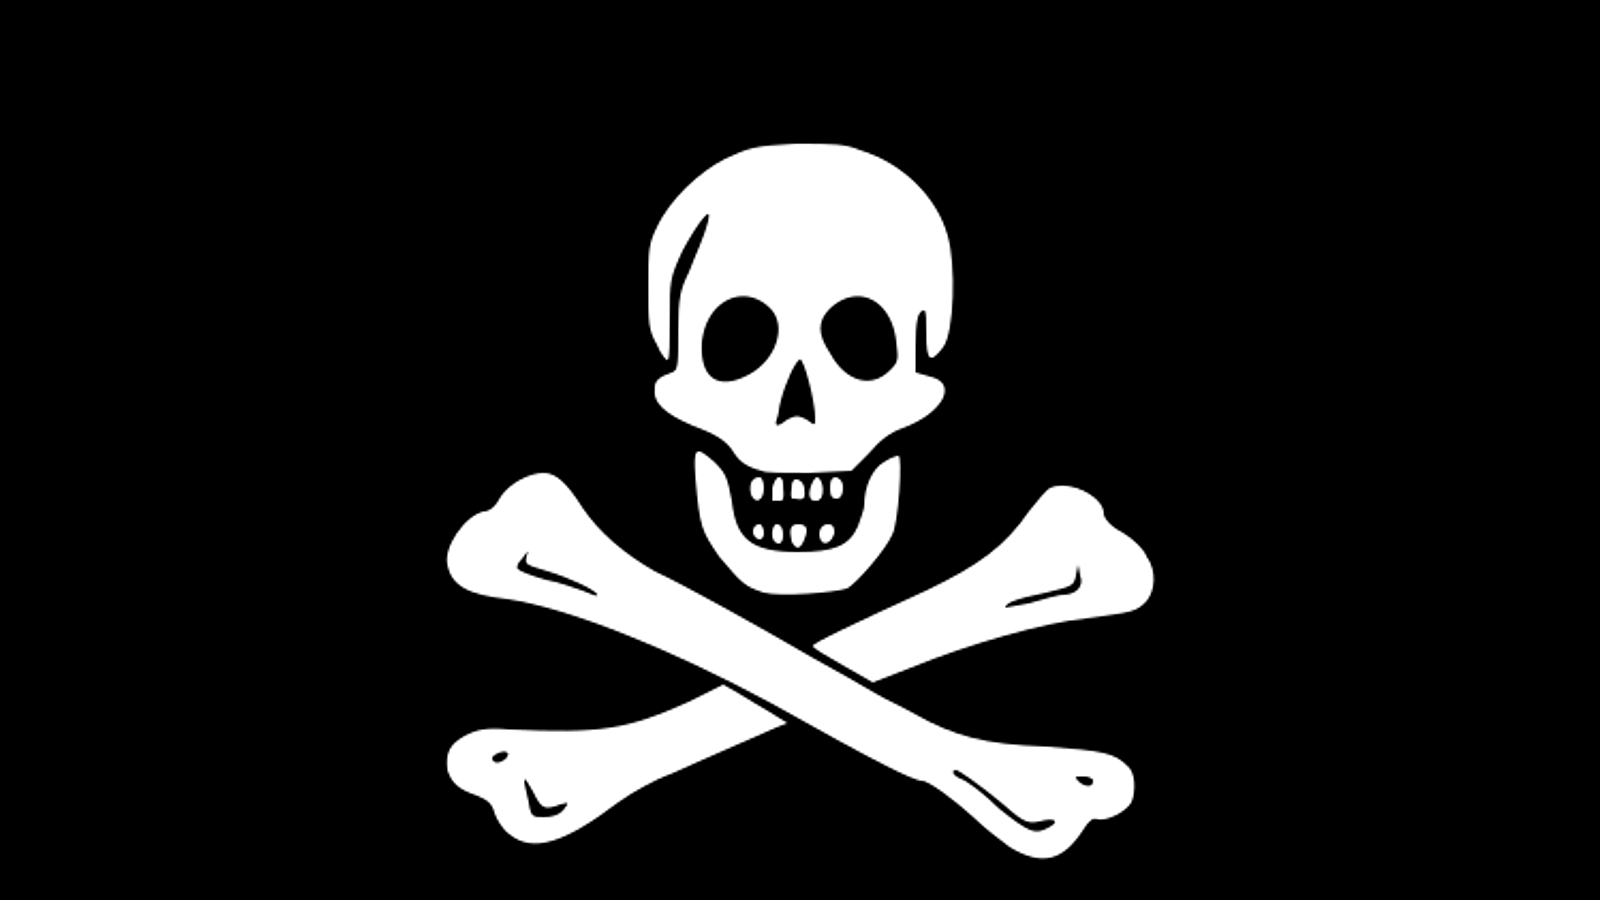 Pirates Skull Shirts - School Gear Zone